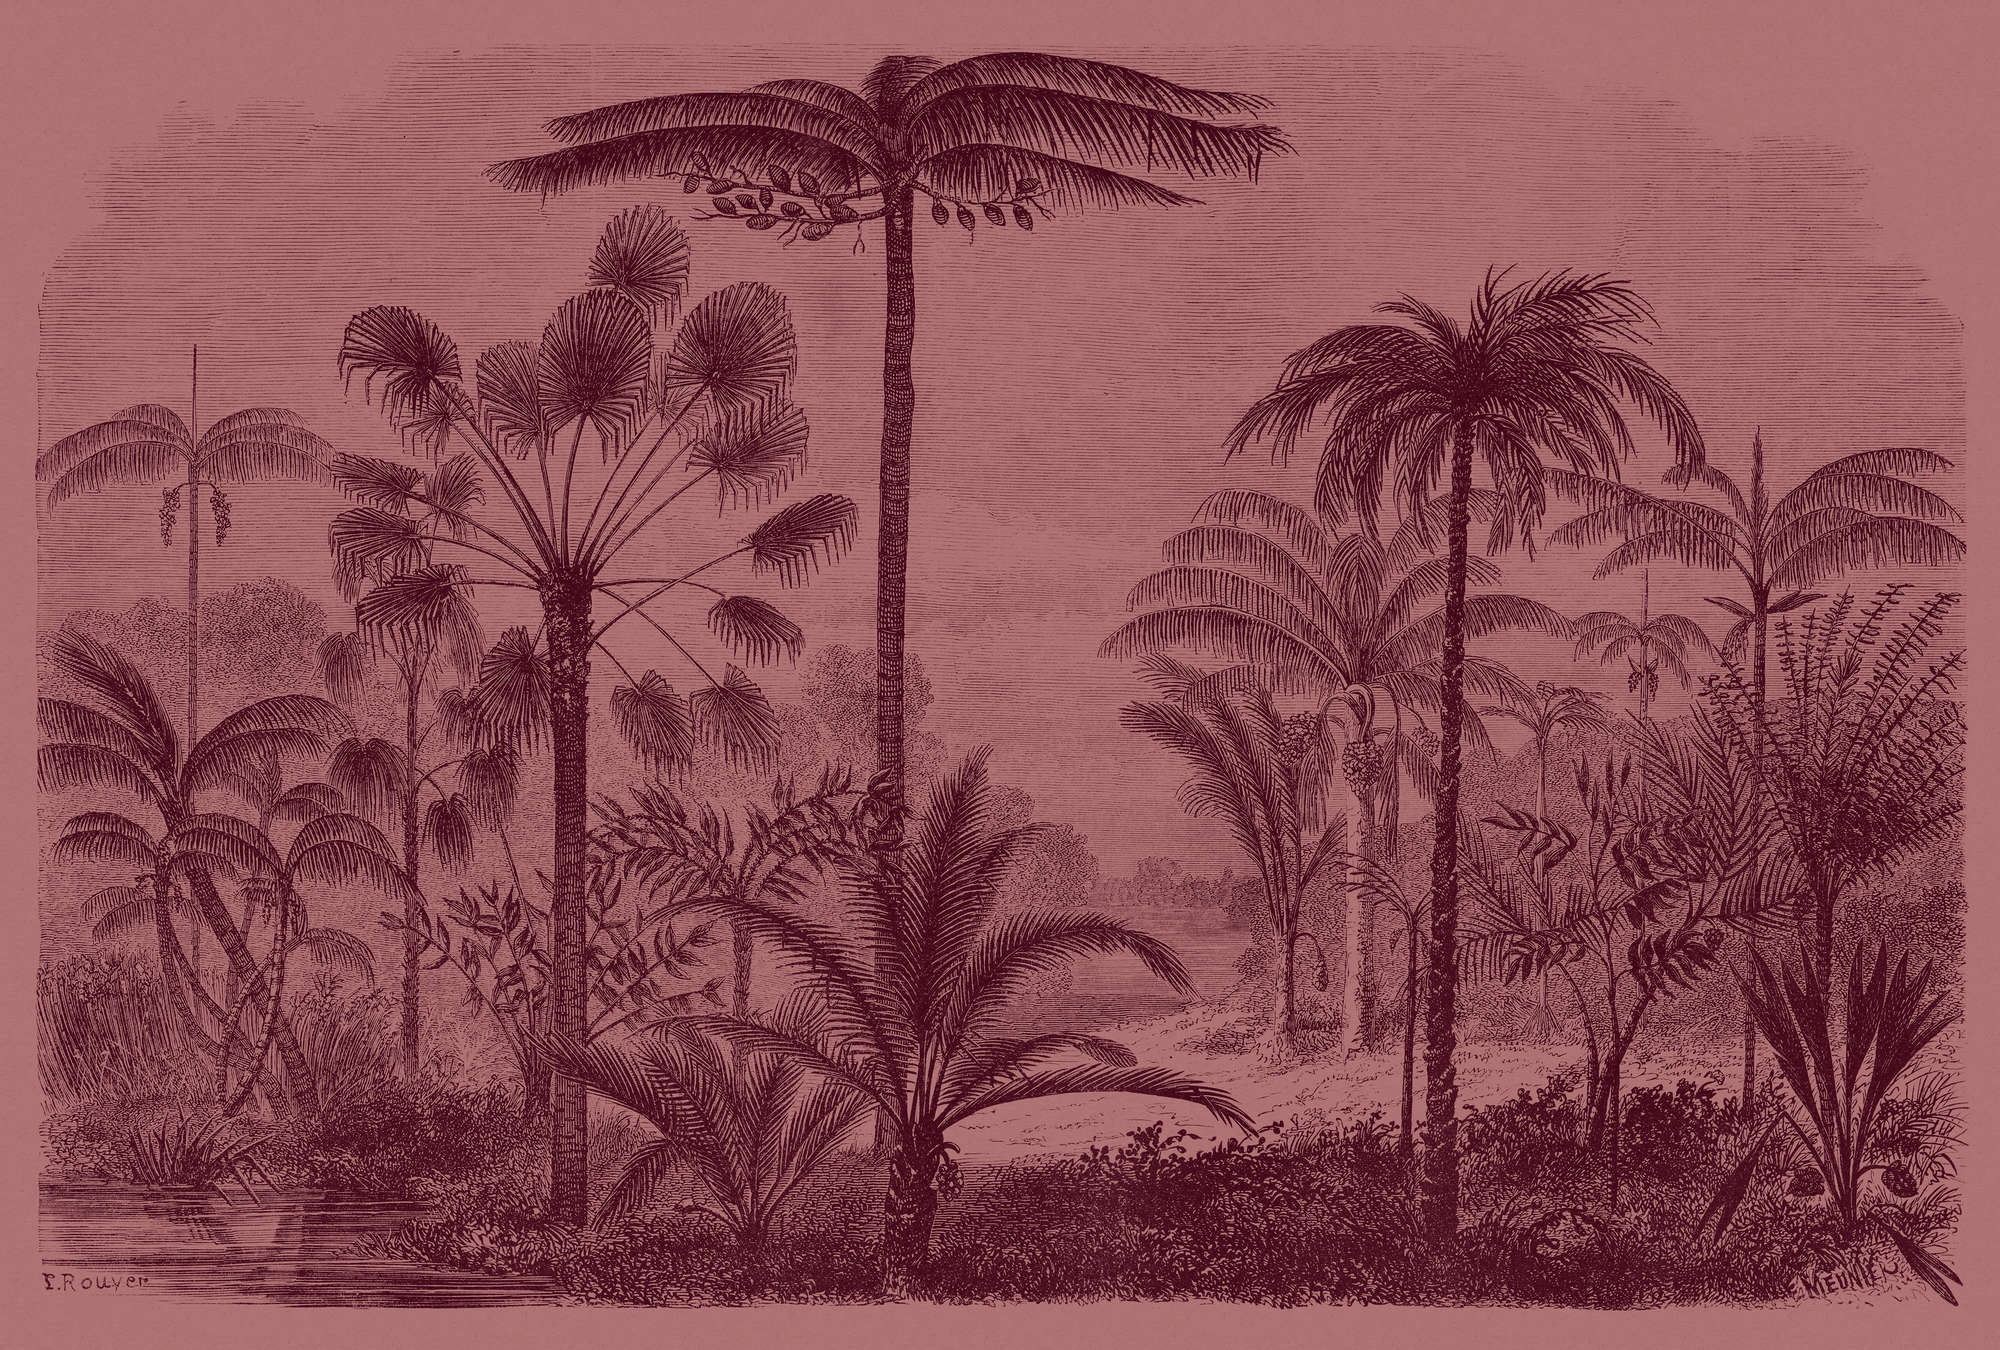             Jurassic 2 - Papel pintado con estructura de cartulina motivo jungla grabado cobre rojo - Rosa, Rojo | Felpa lisa mate
        